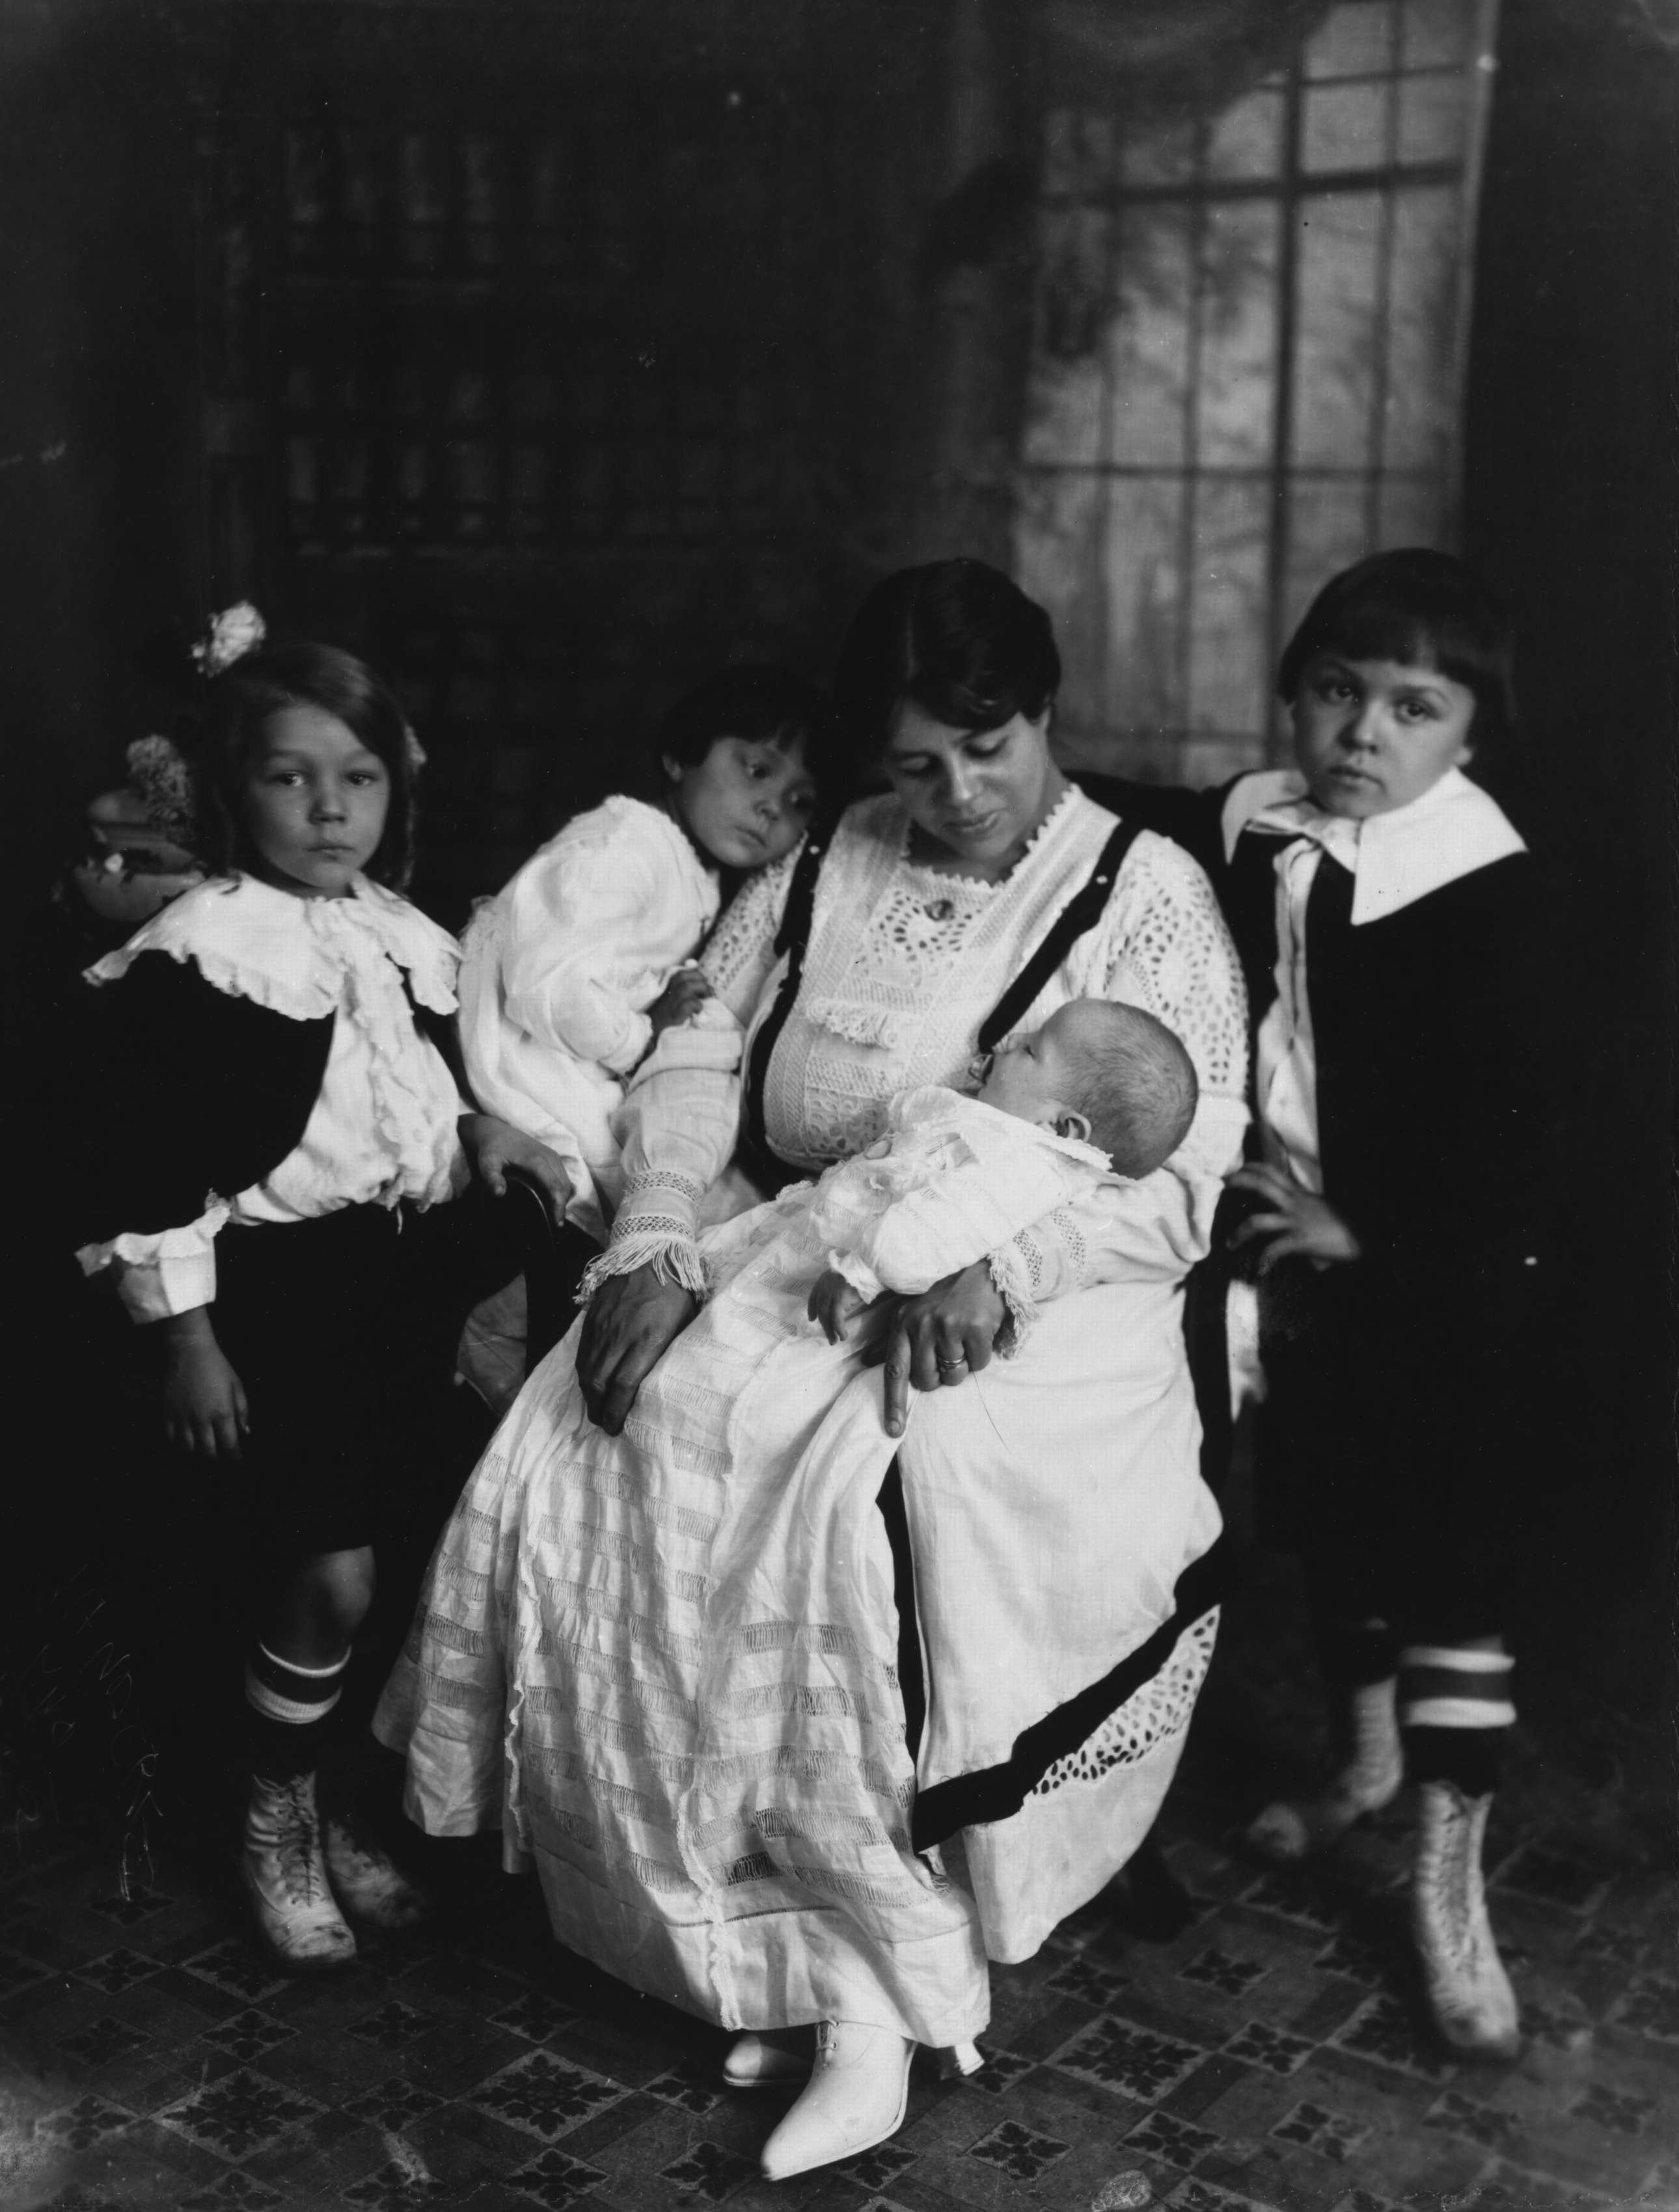 Emma, Gaynella VanDerZee's sister, with her children